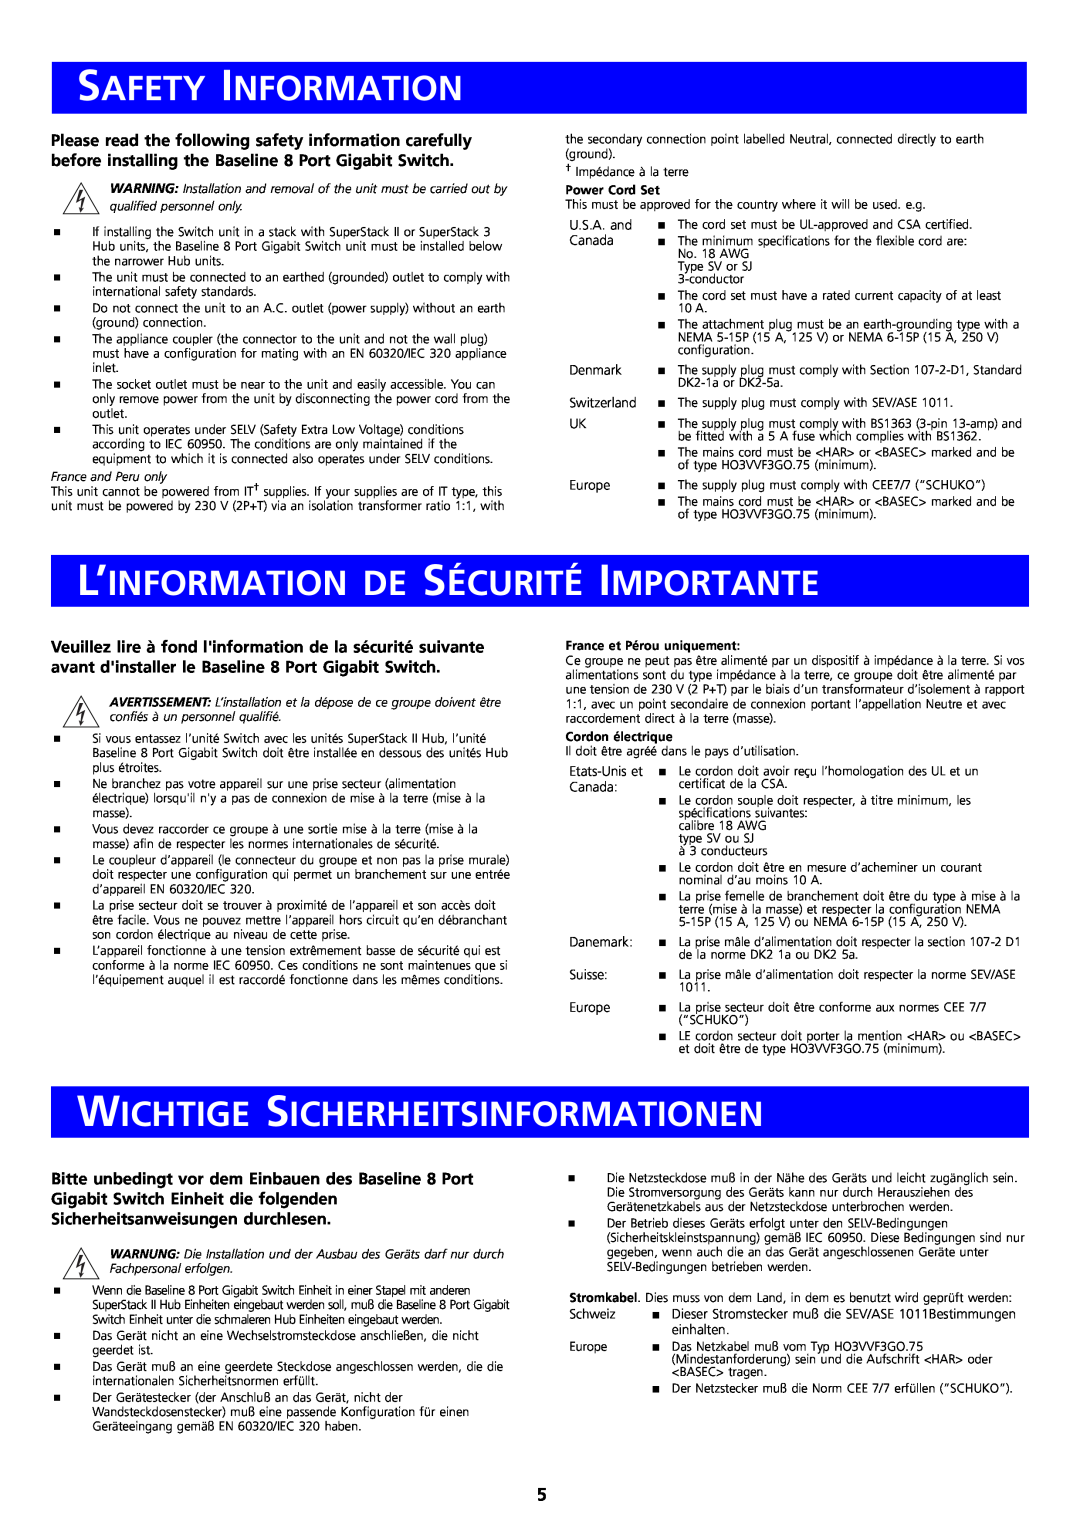 3Com DUA1647-7AAA01 manual Safety Information, L’Information De Sécurité Importante, Wichtige Sicherheitsinformationen 